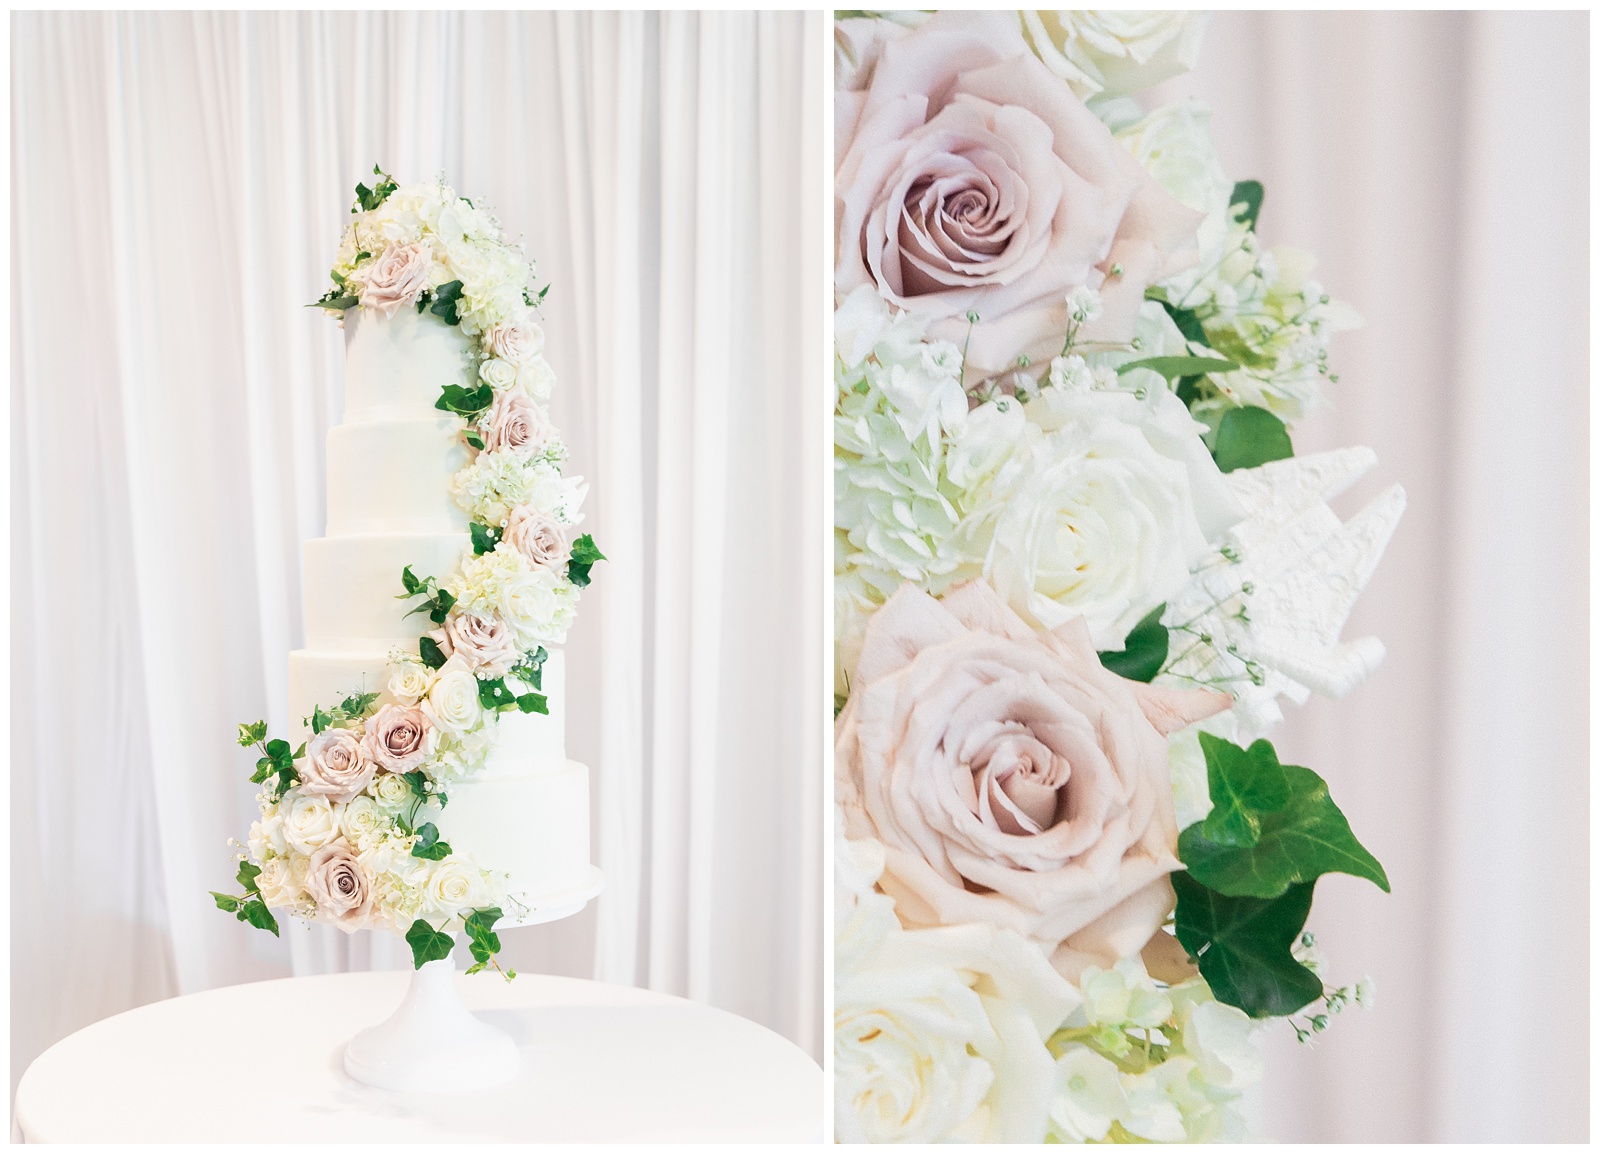 Elegant 6-layer wedding cake with beautiful flowers | Matlock and Kelly Photography